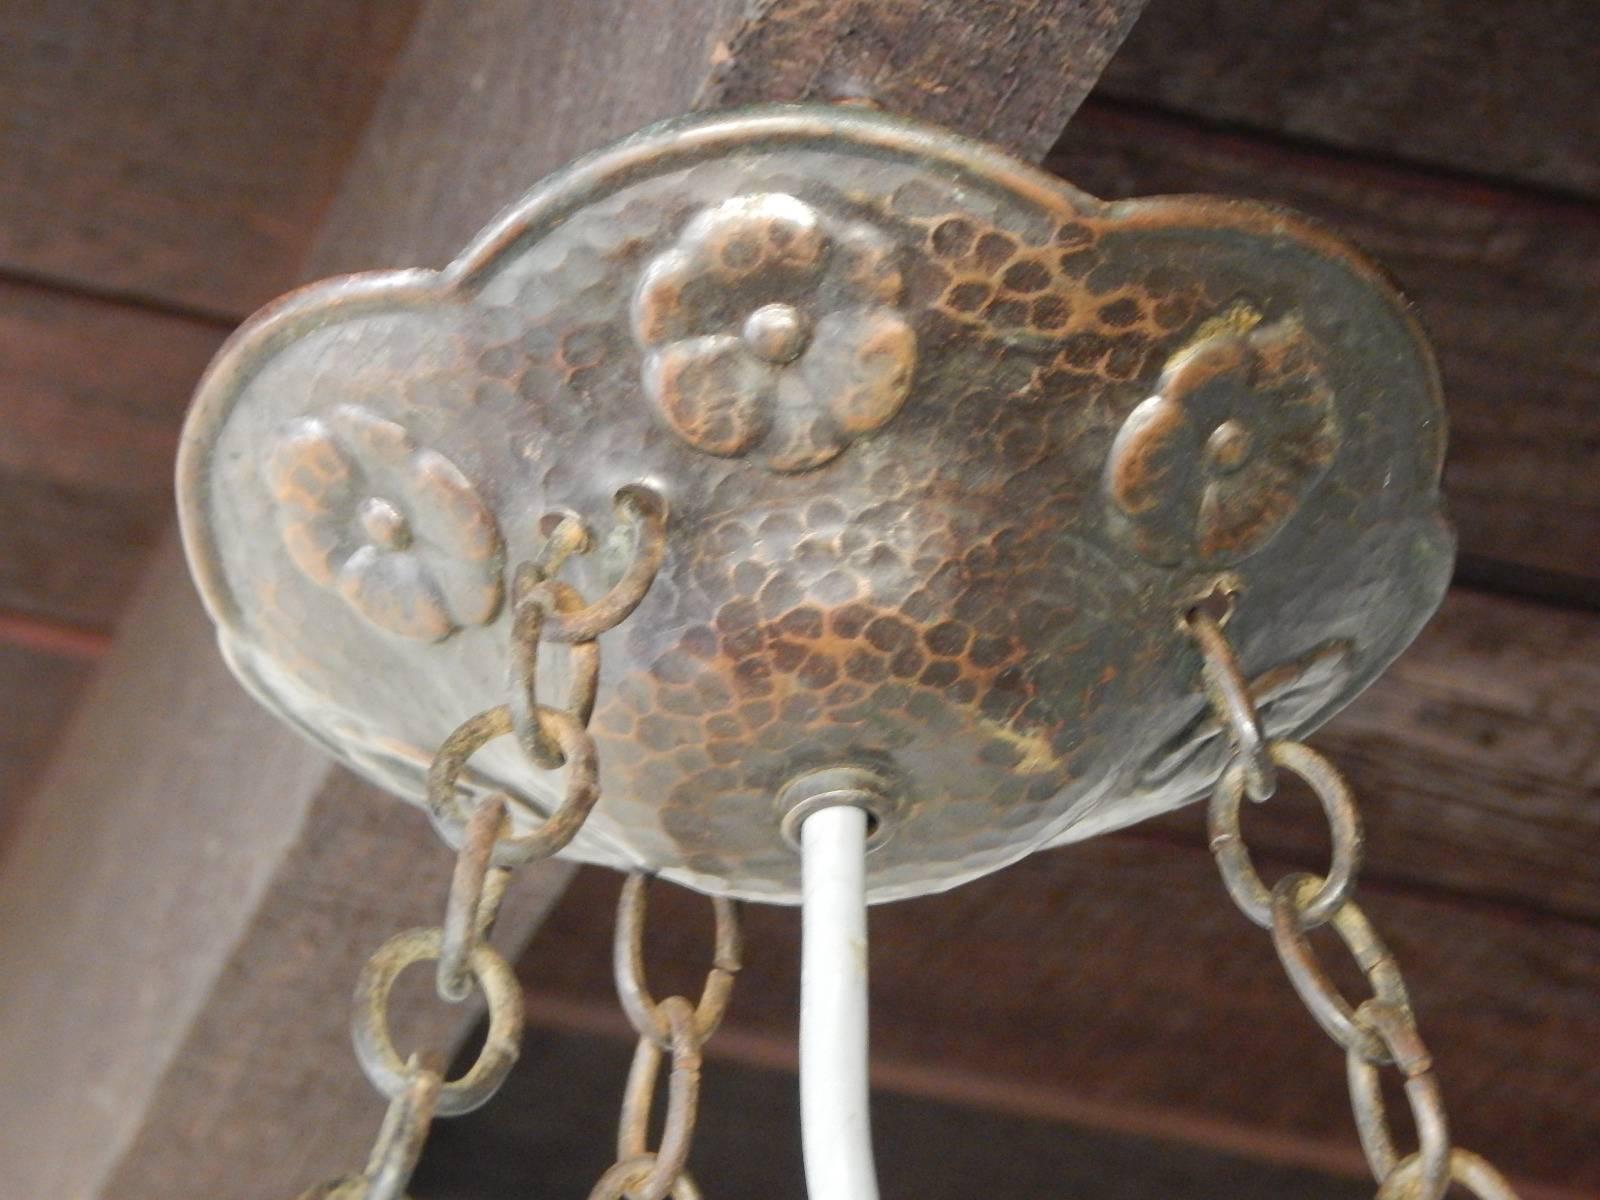 hammered copper chandelier